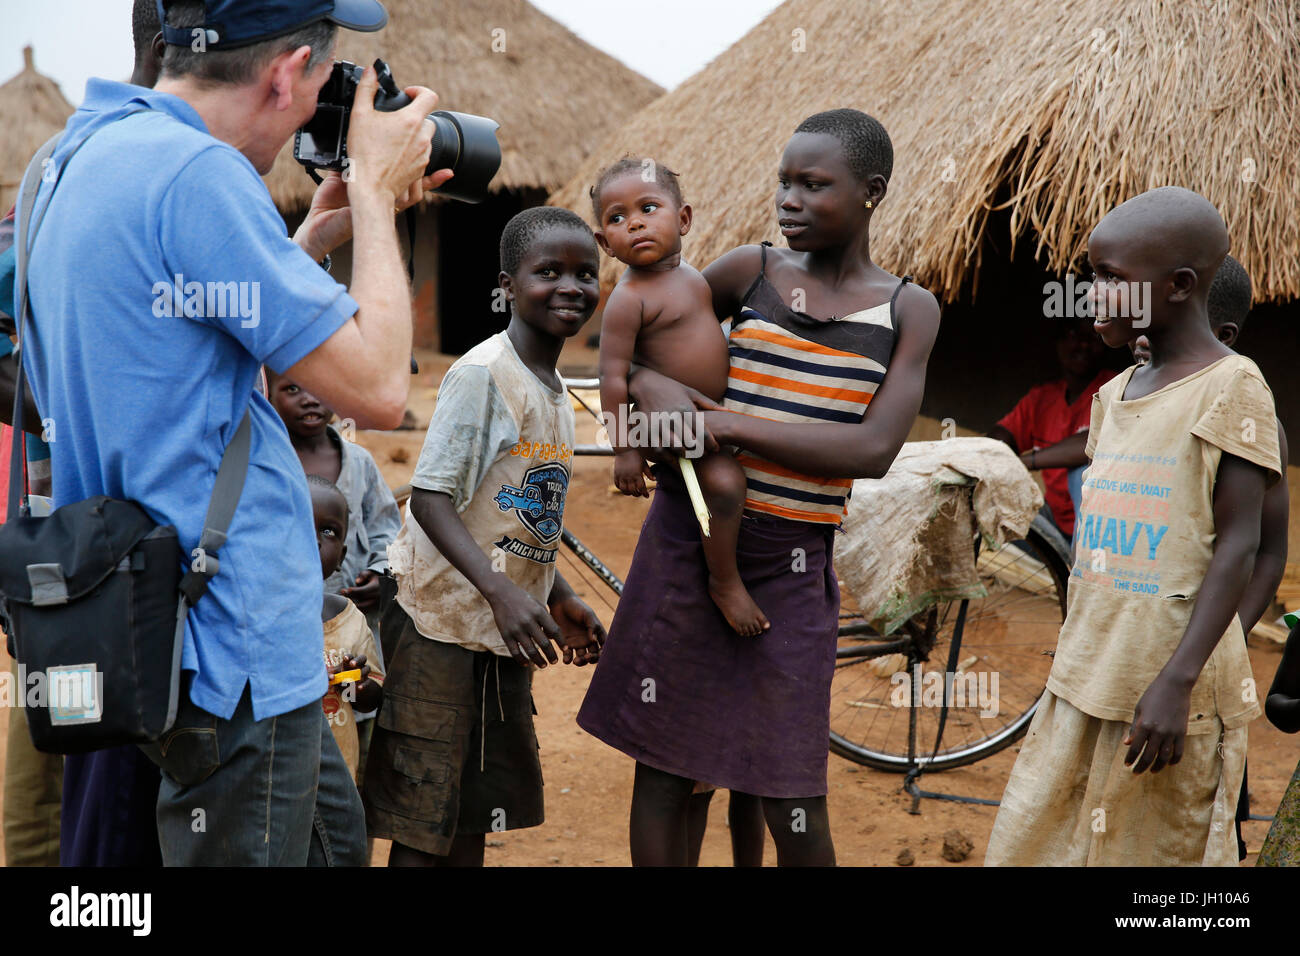 European photographer in Uganda. Uganda. Stock Photo